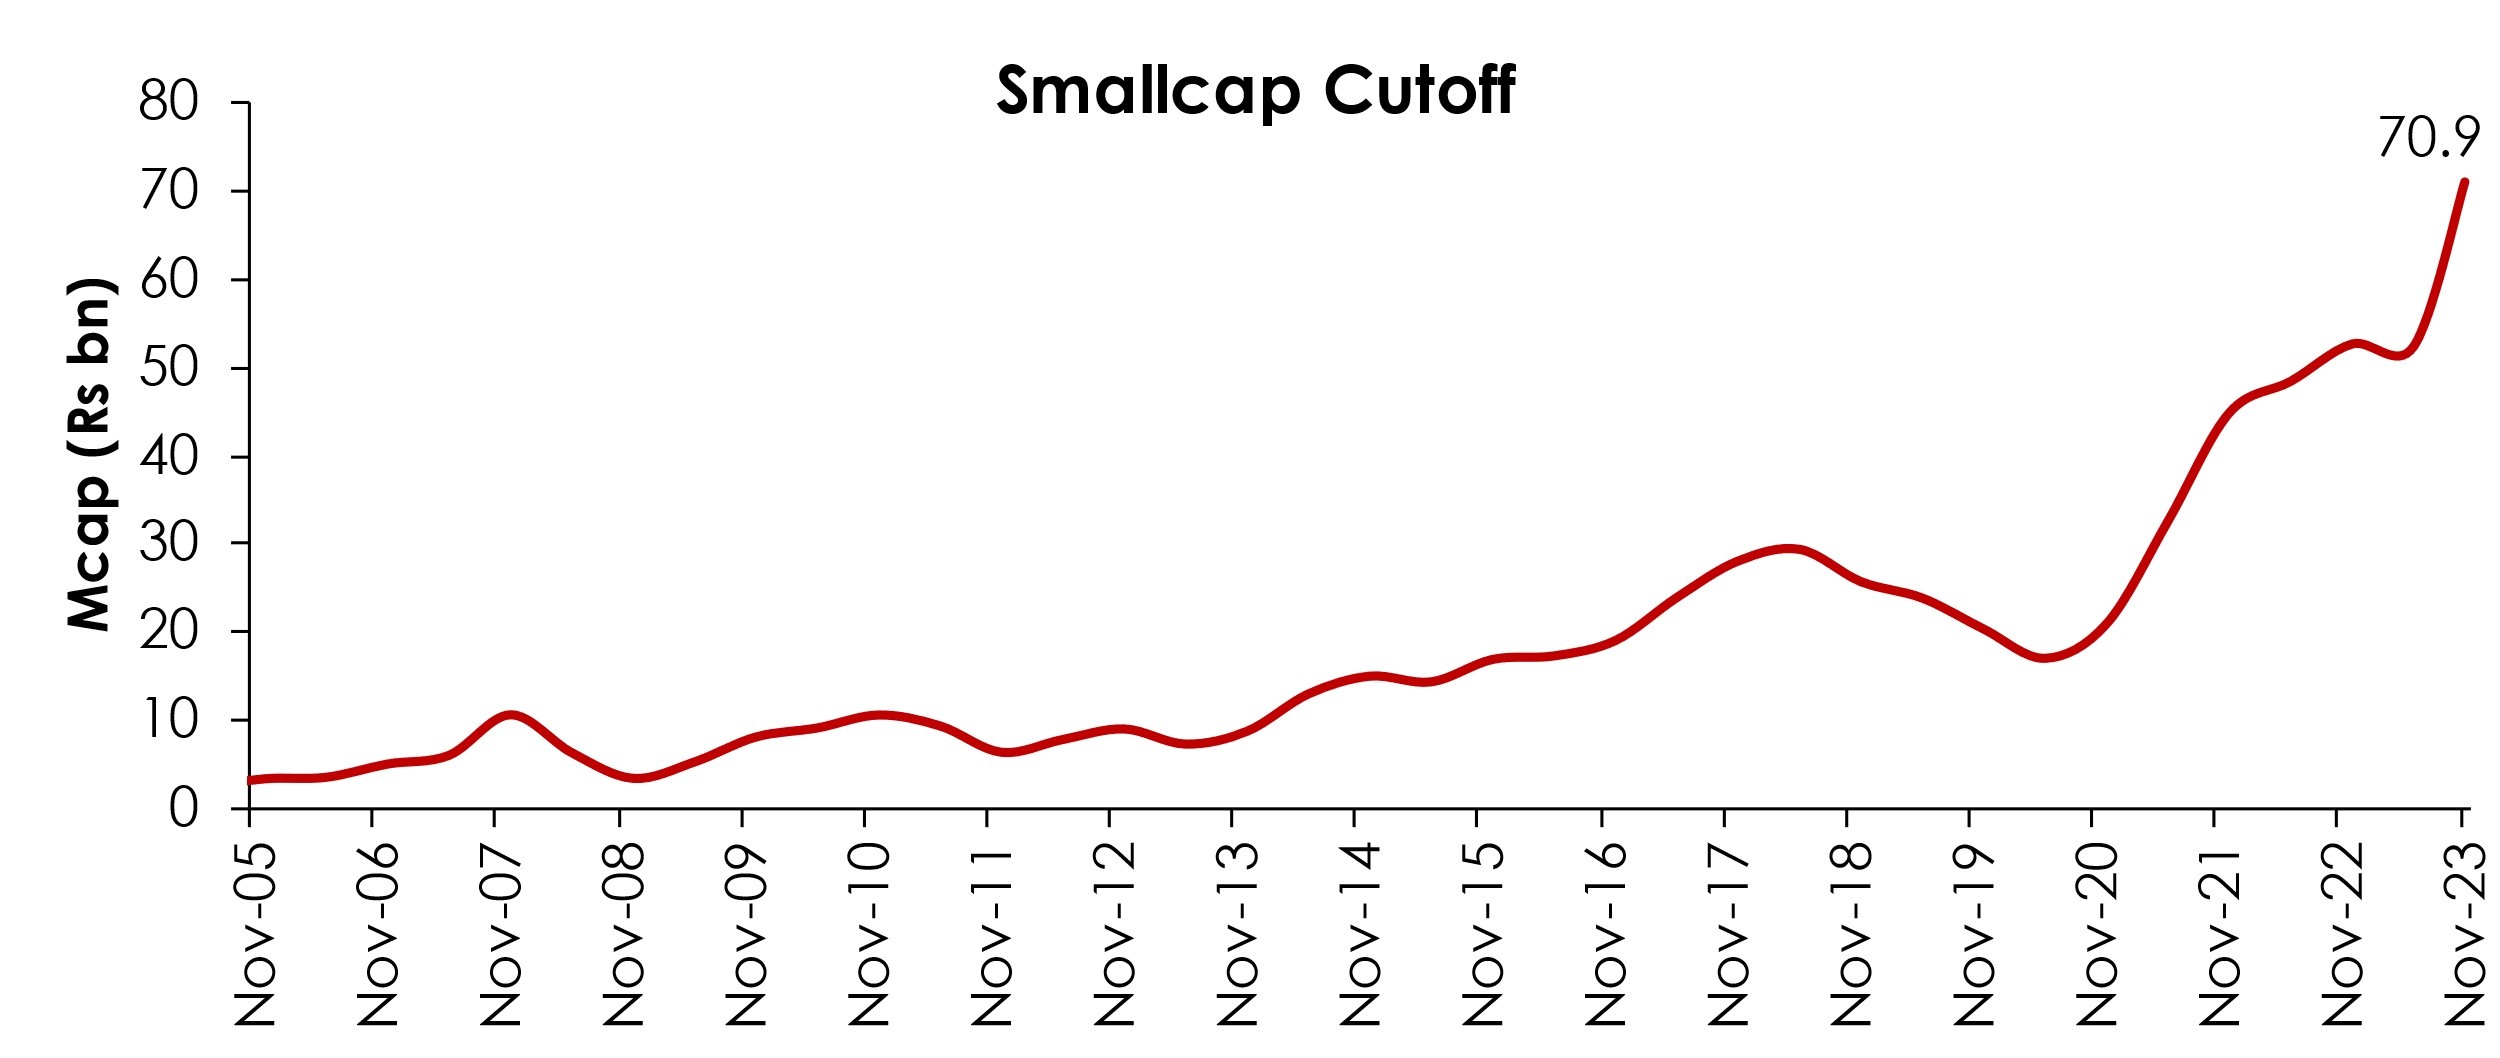 SmallCap